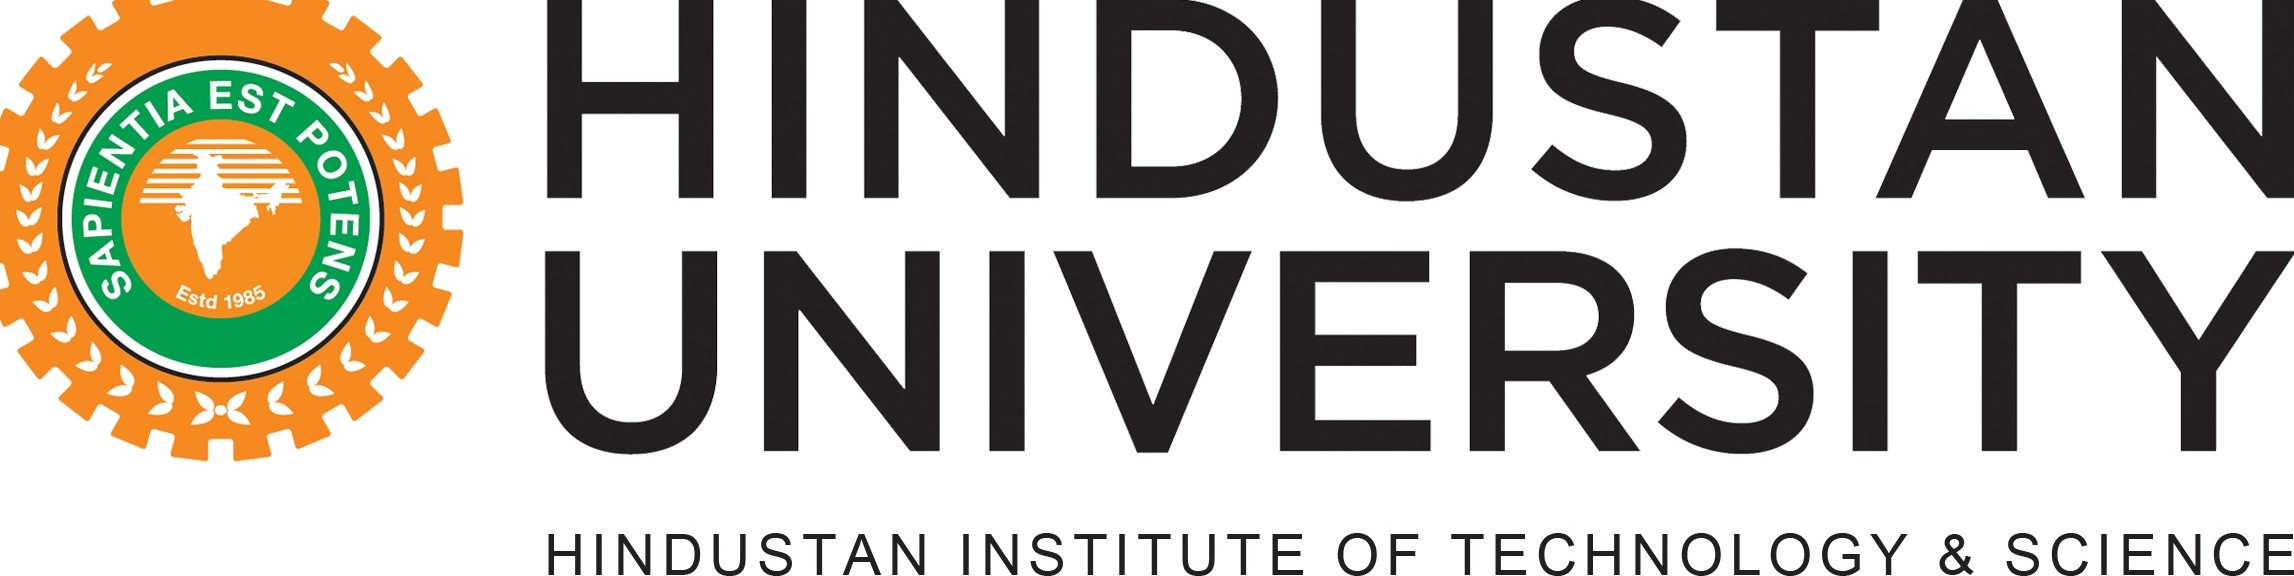 Hindustan Institute of Technology & Science Deemed university in India Online